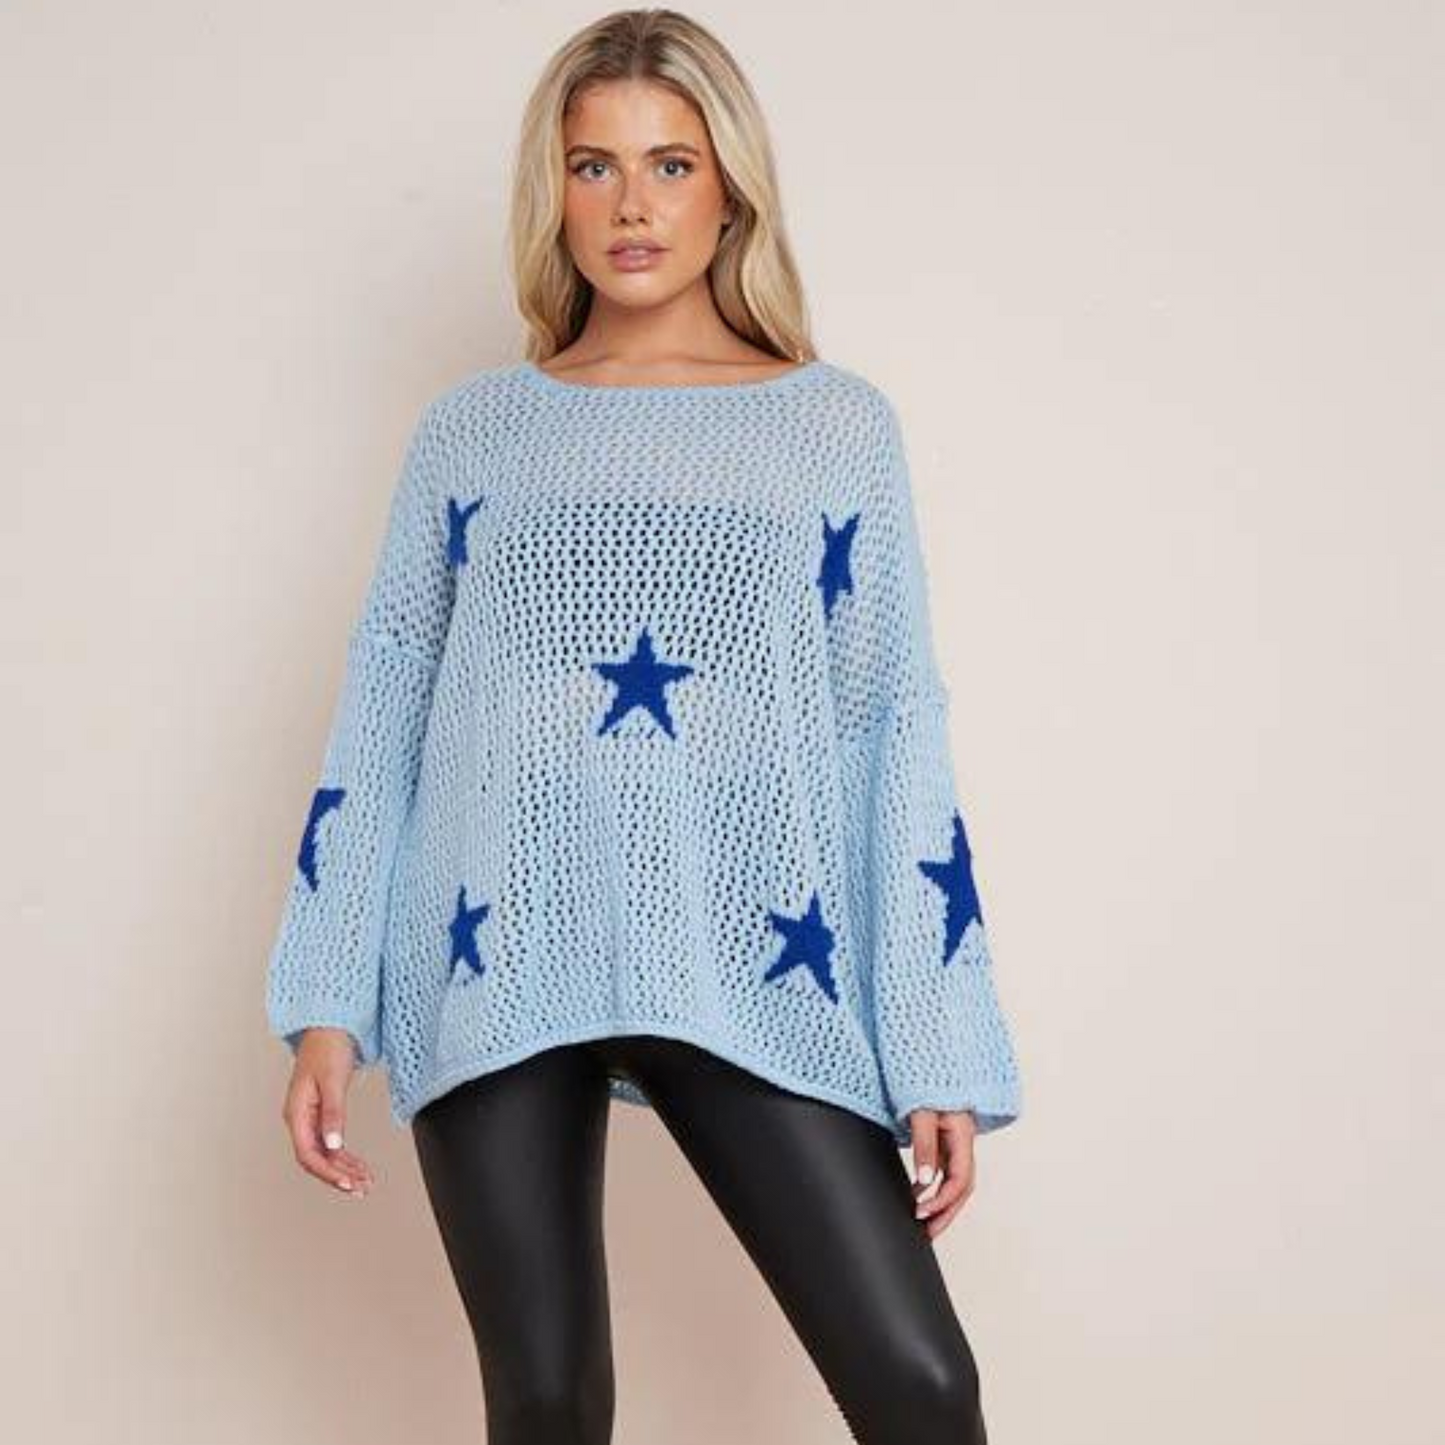 Anya oversized star pattern jumper .